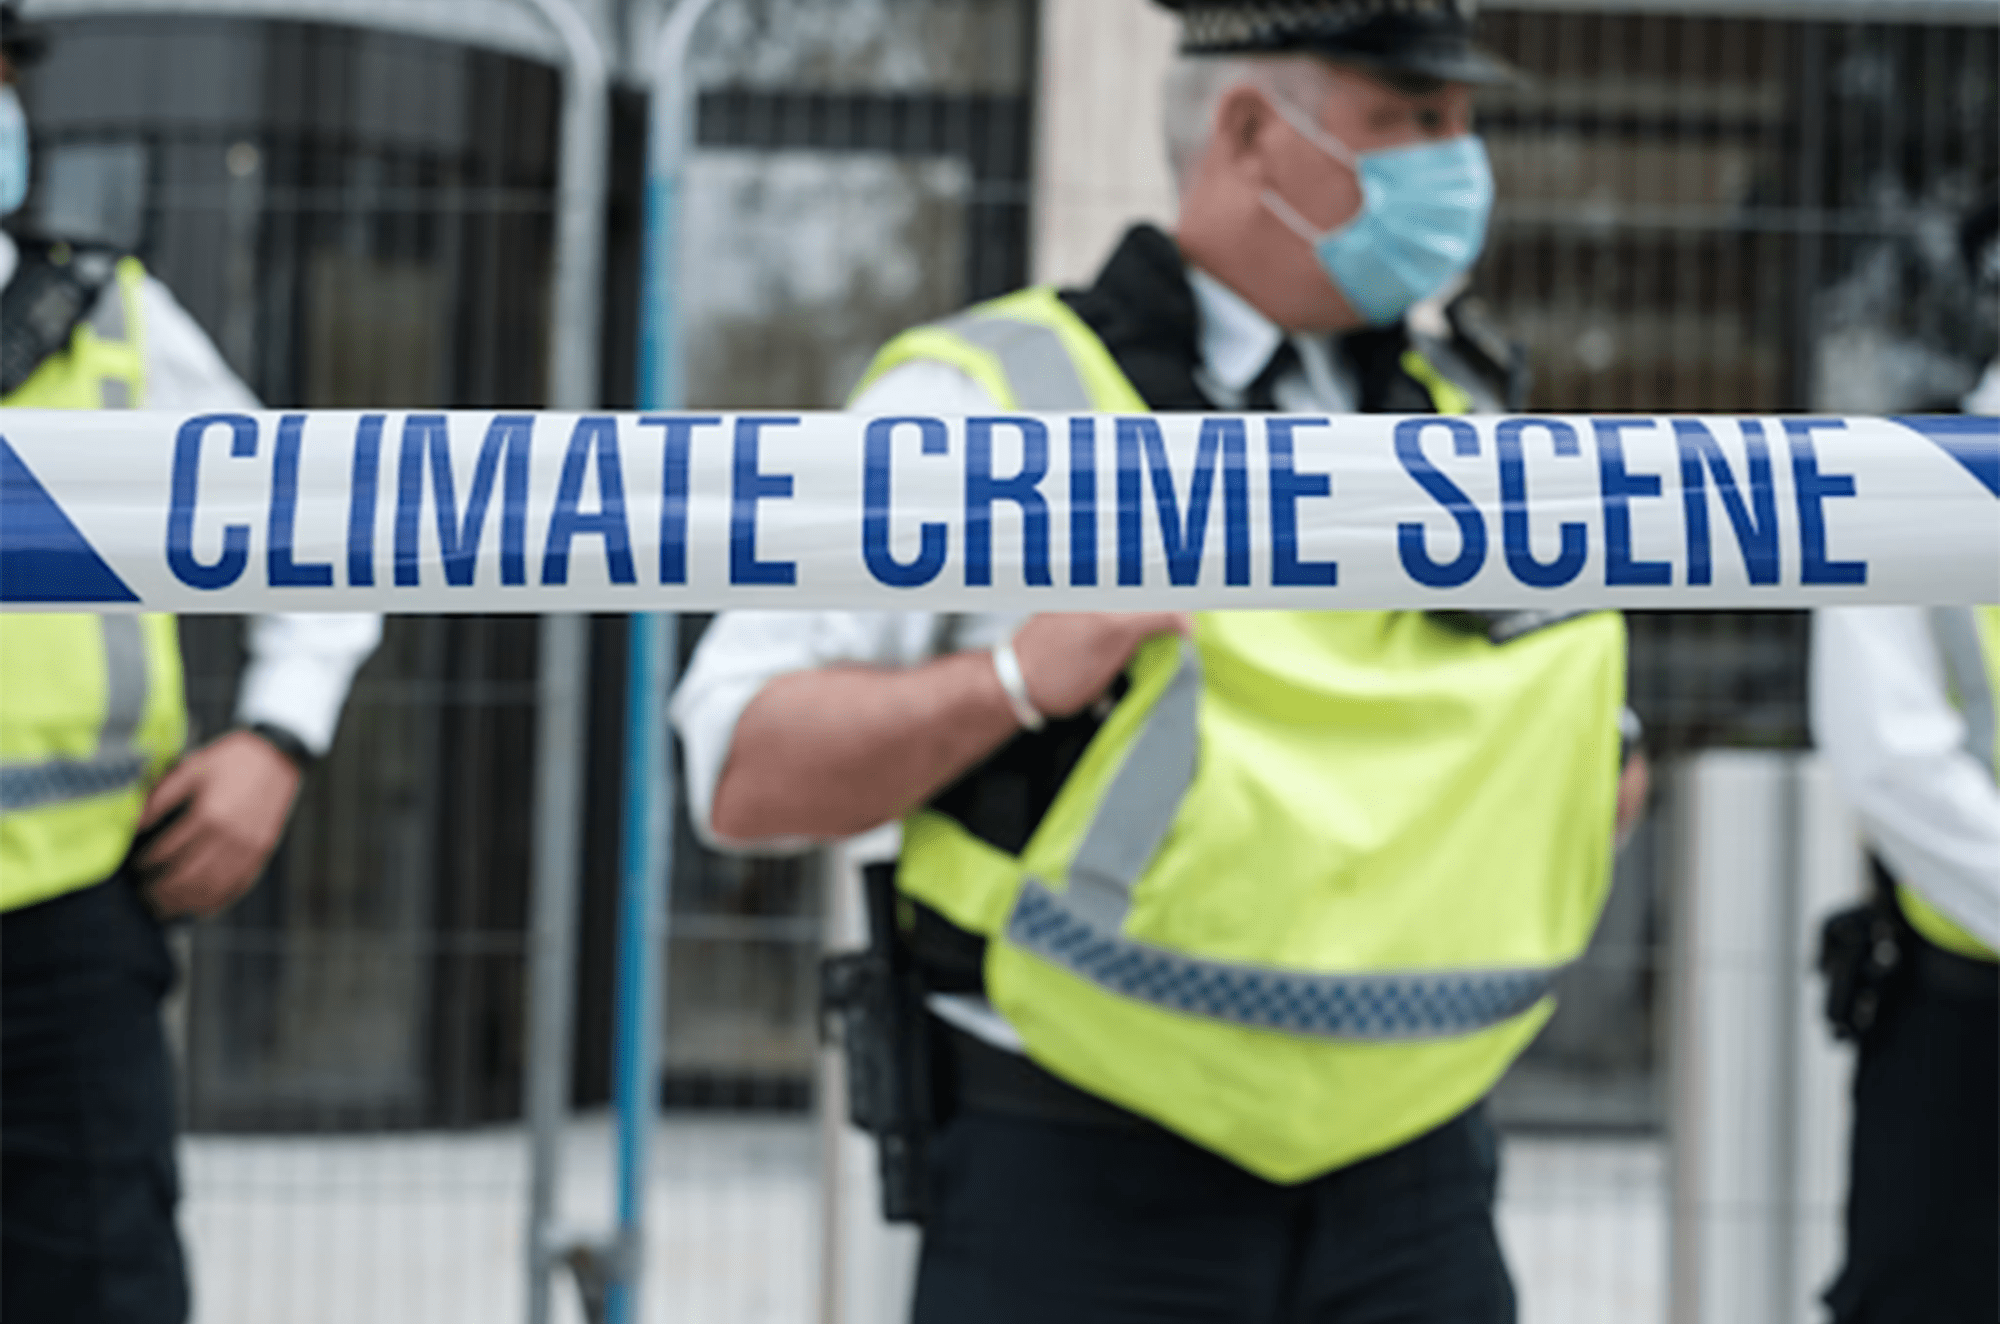 Police behind climate crime scene tape